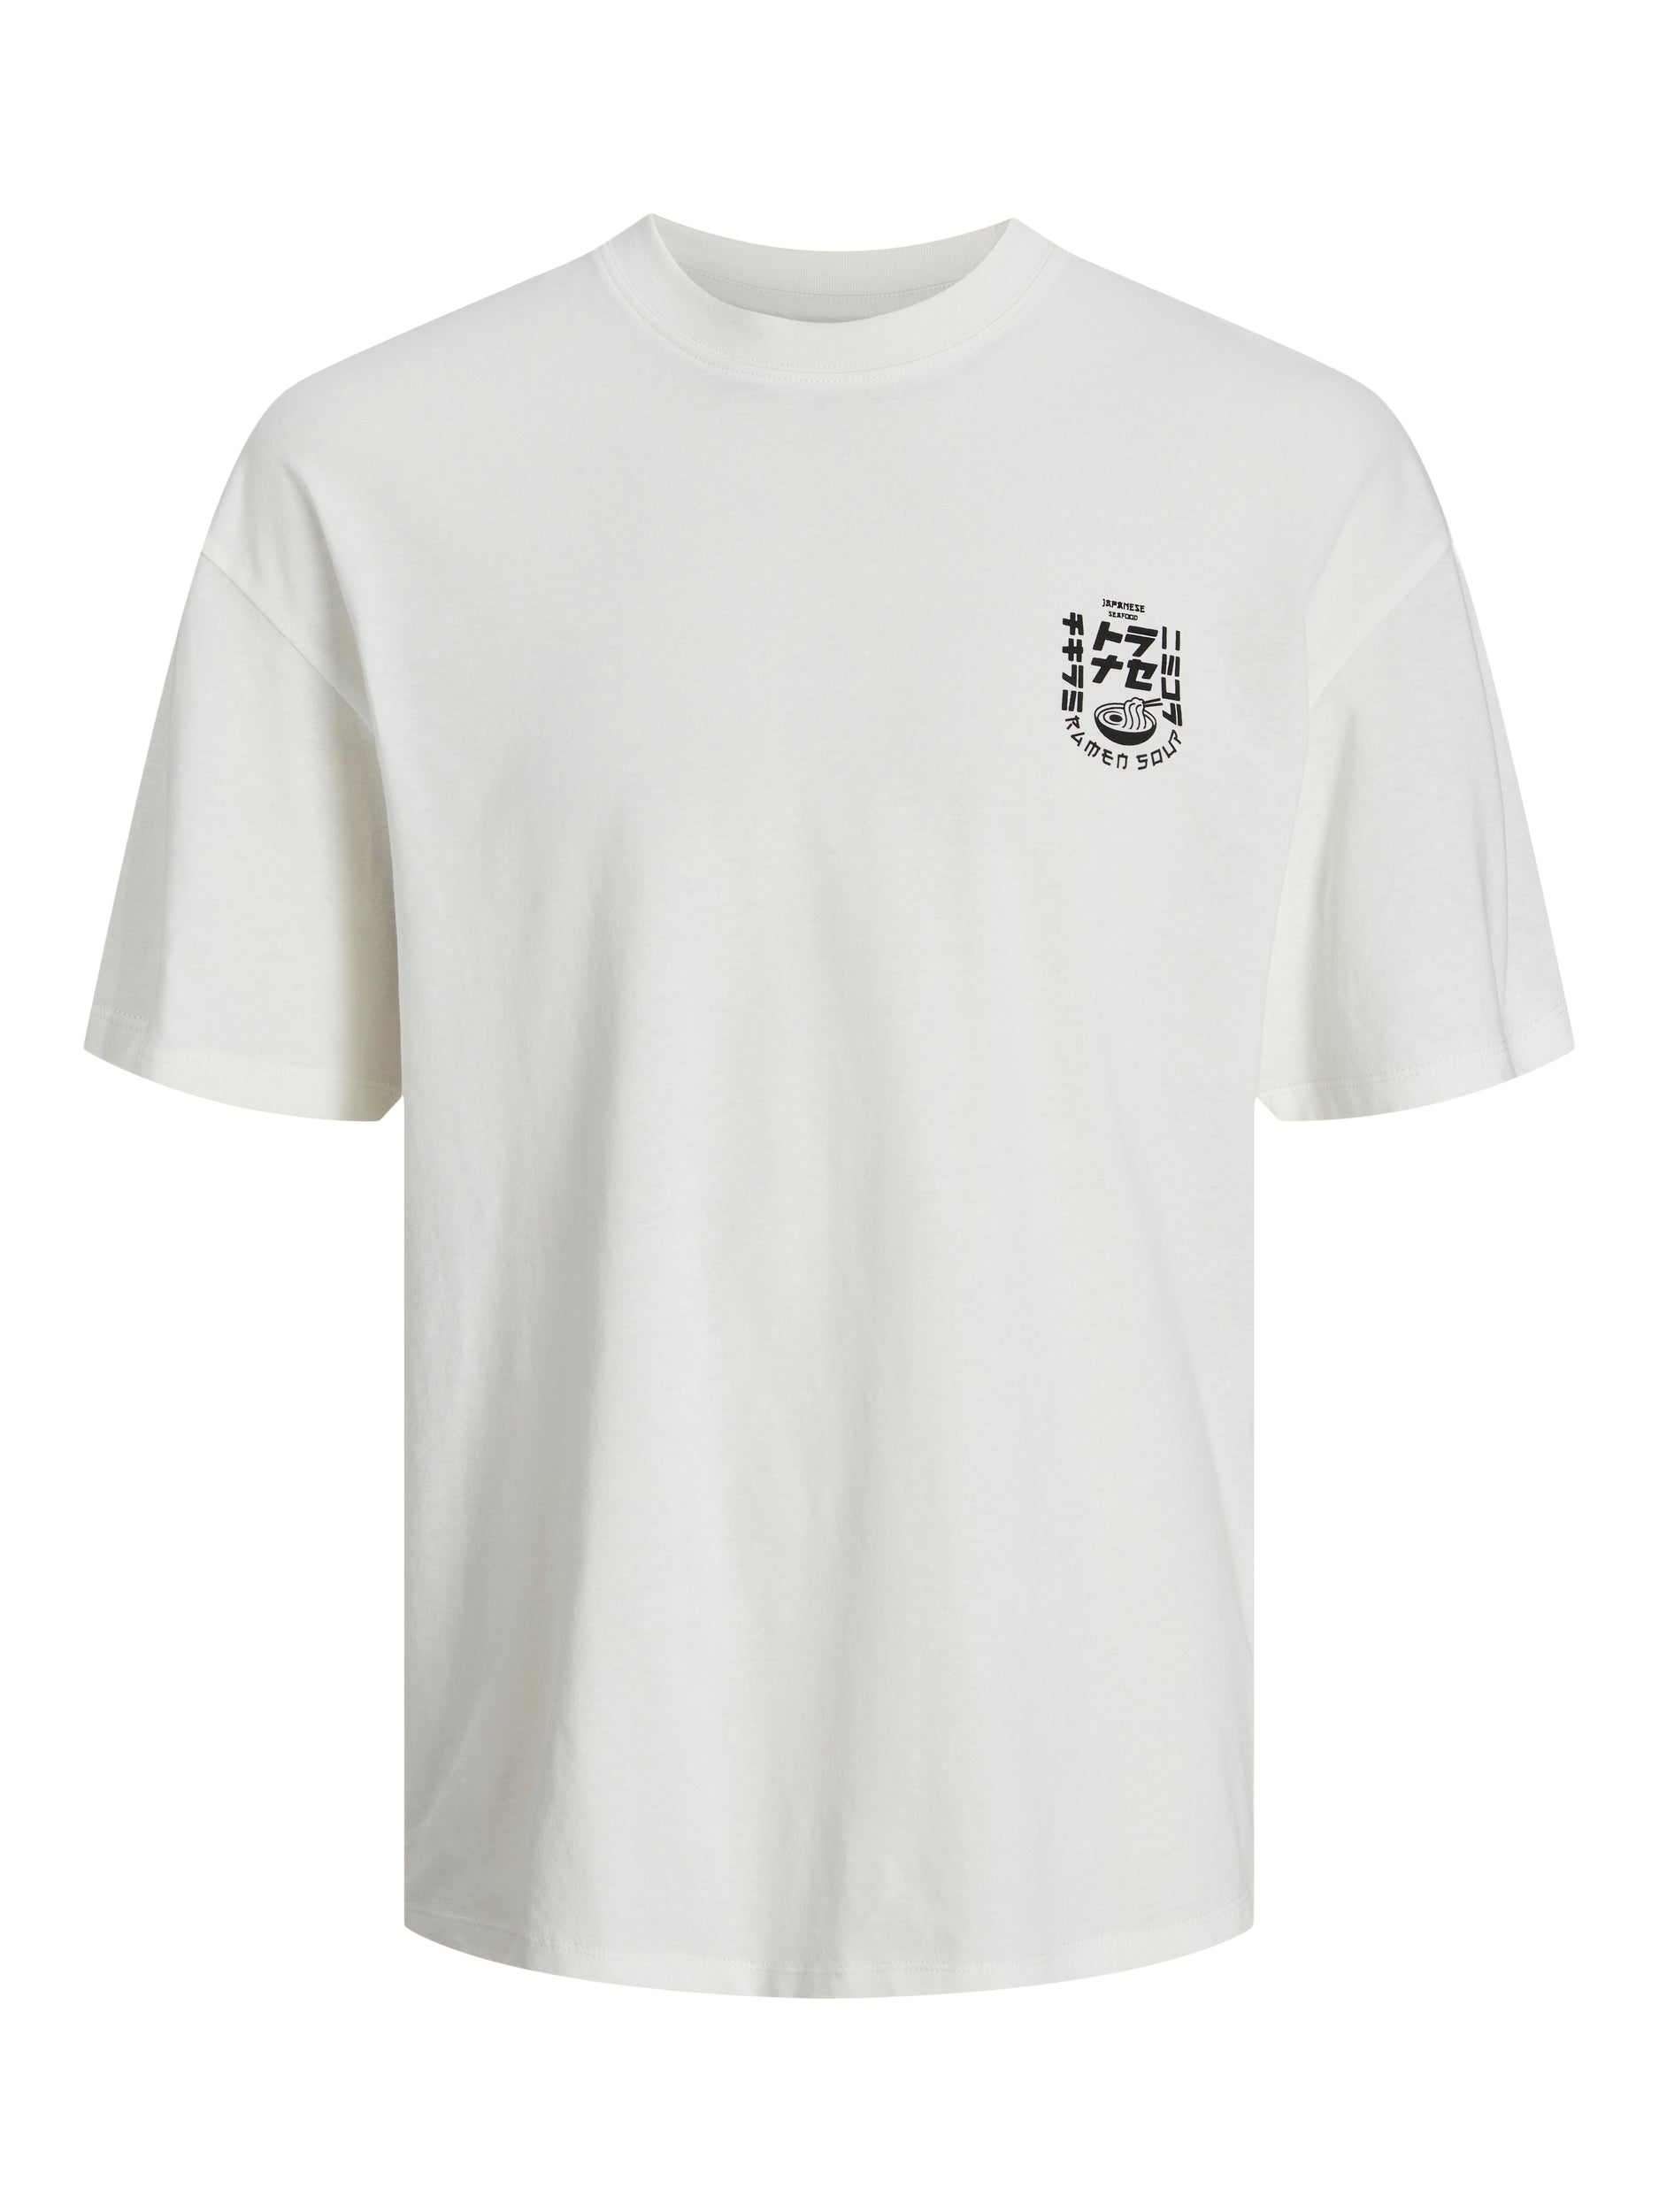 Jack & Jones t-shirt bianco con stampa japan